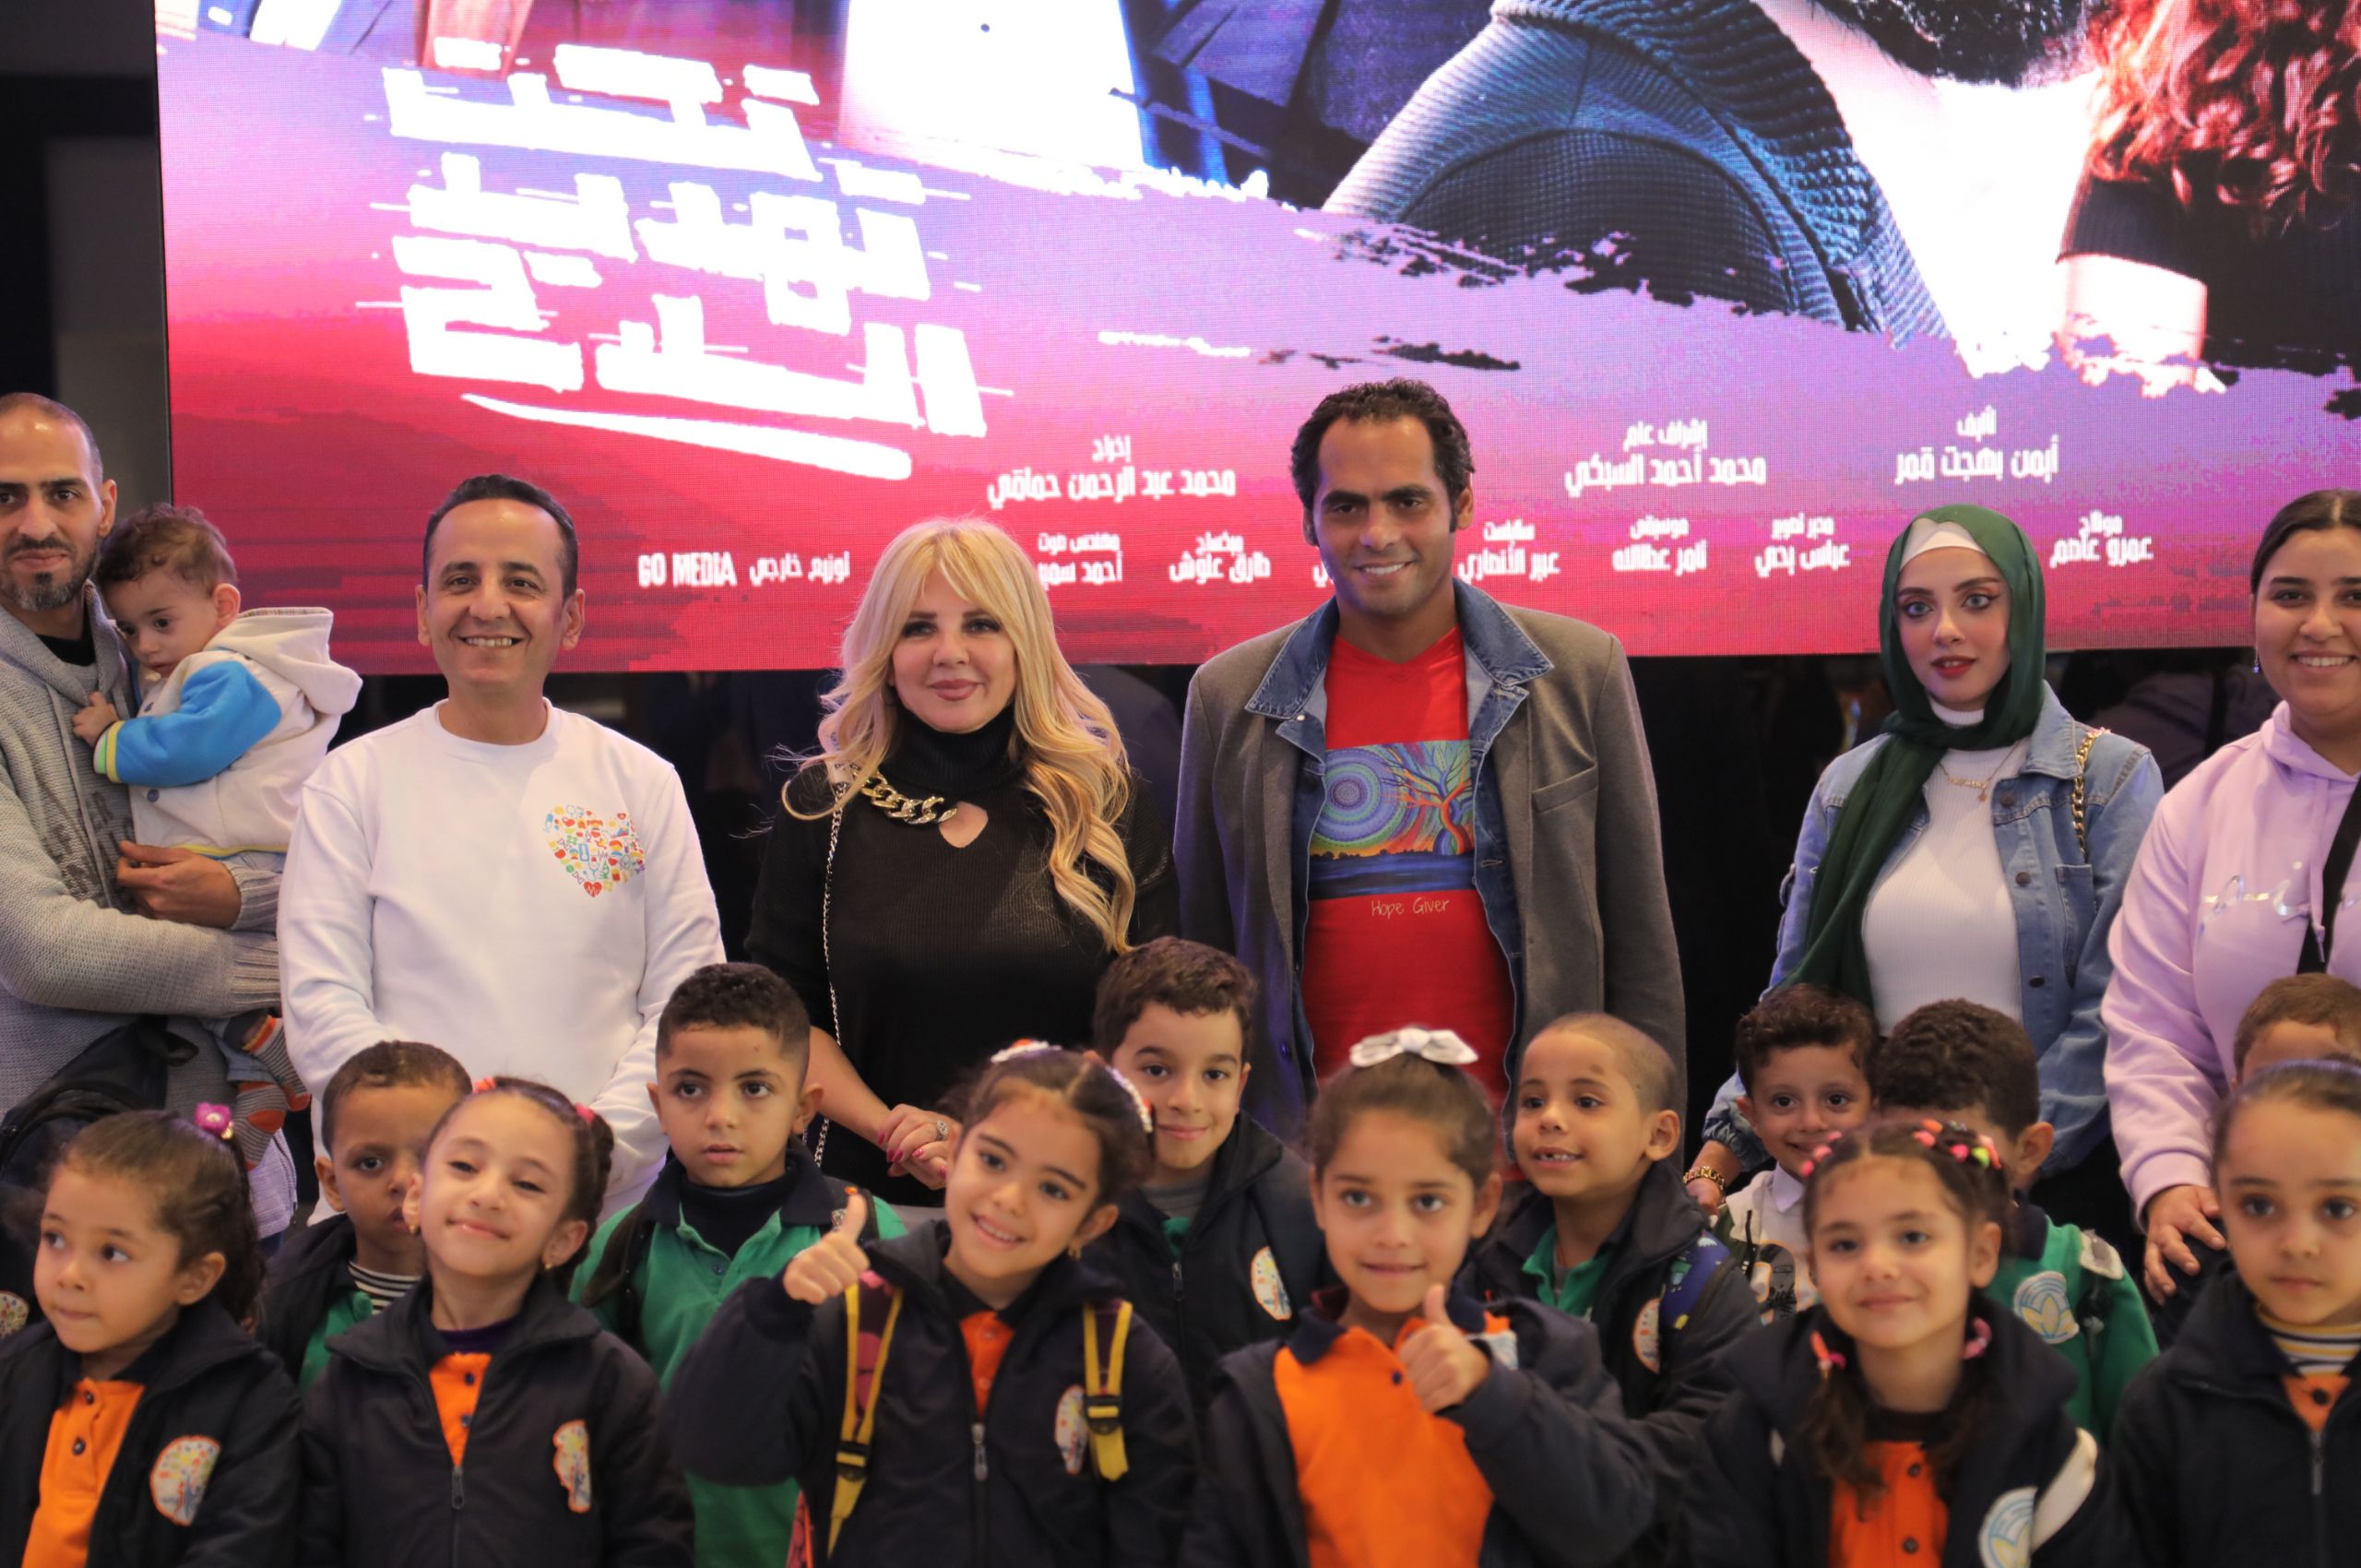 WEEK OF HOPE IN PARTNERSHIP WITH VOX CINEMAS EGYPT